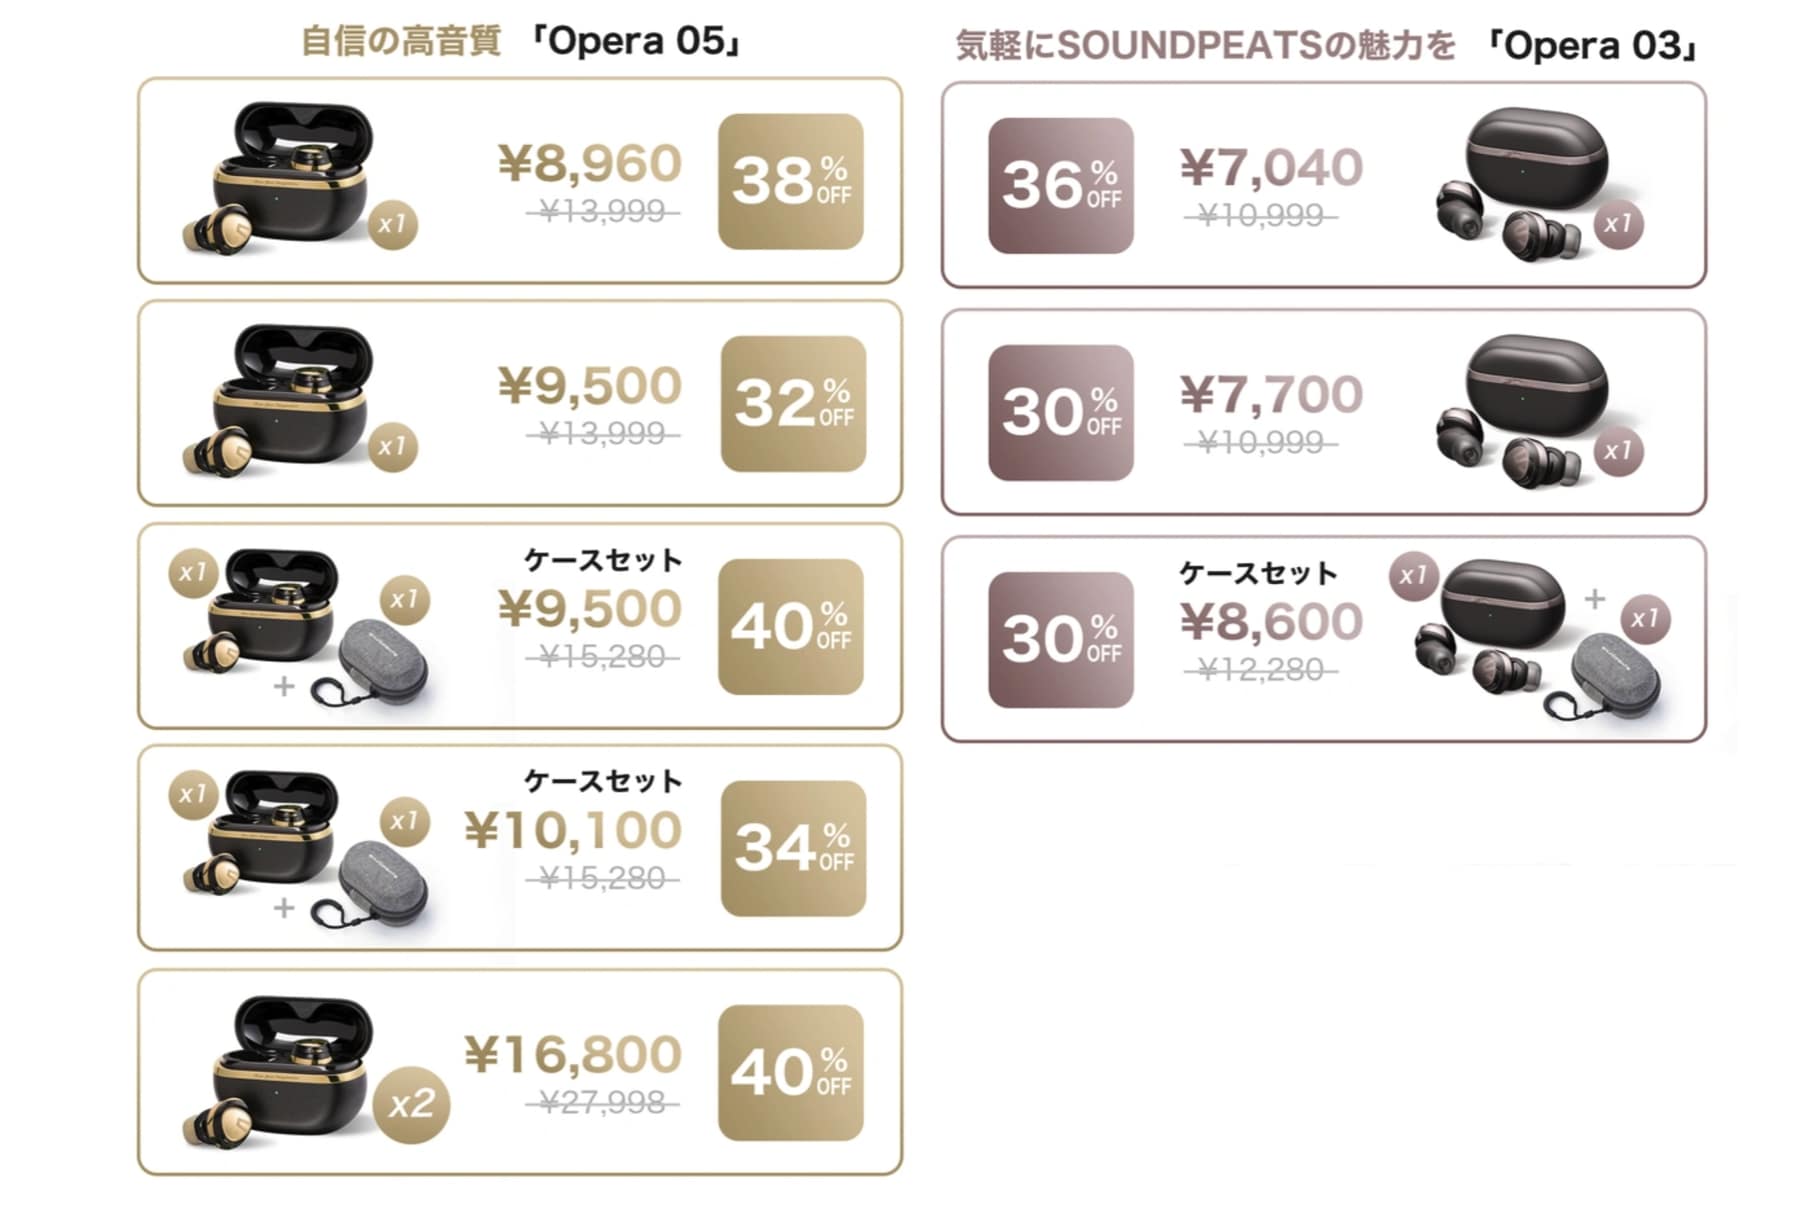 SOUNDPEATS Opera 05 03の販売状況　makuake